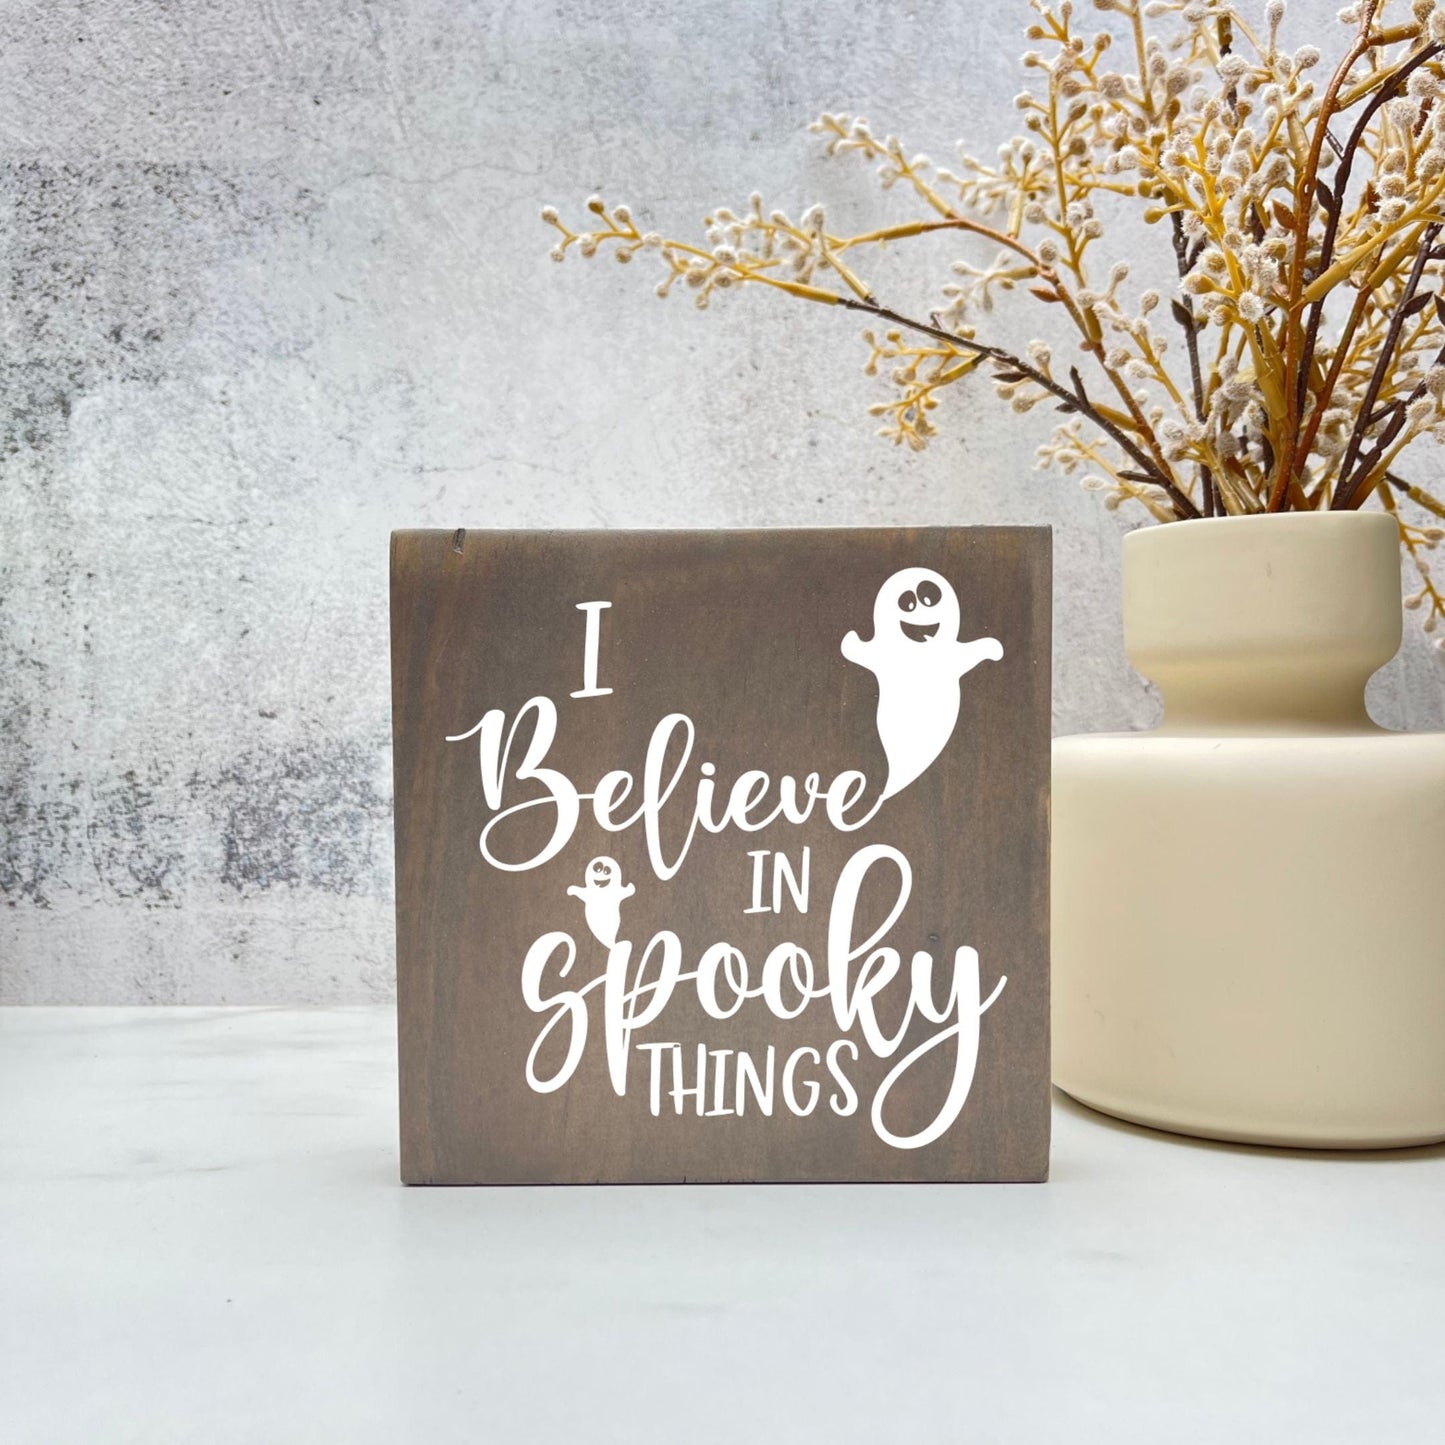 I believe in spooky things Wood Sign, Halloween Wood Sign, Halloween Home Decor, Spooky Decor